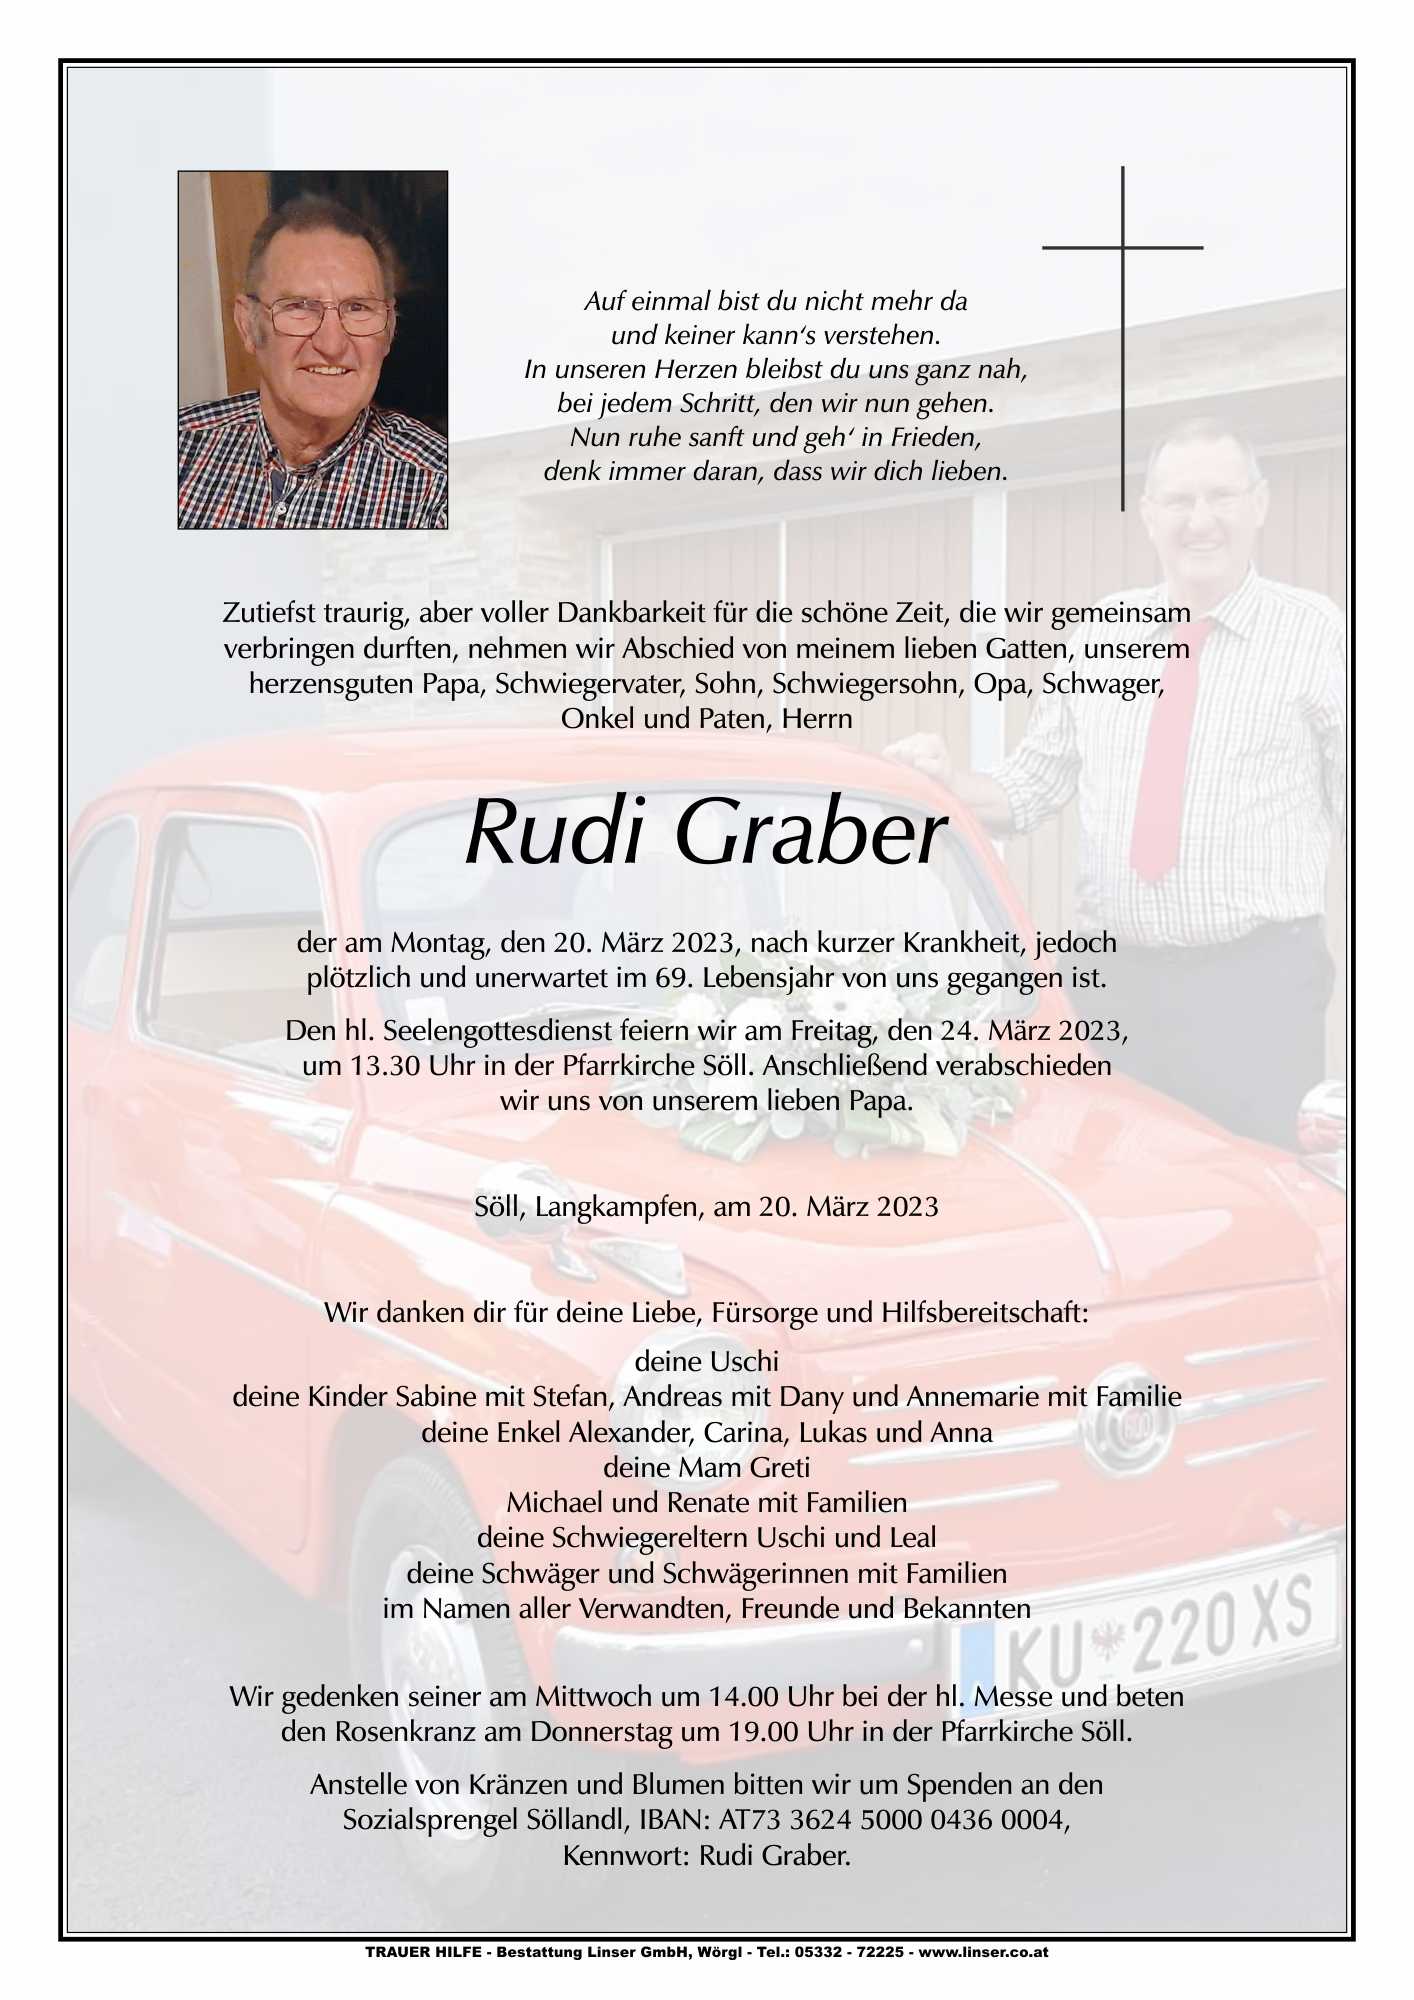 Rudolf Graber